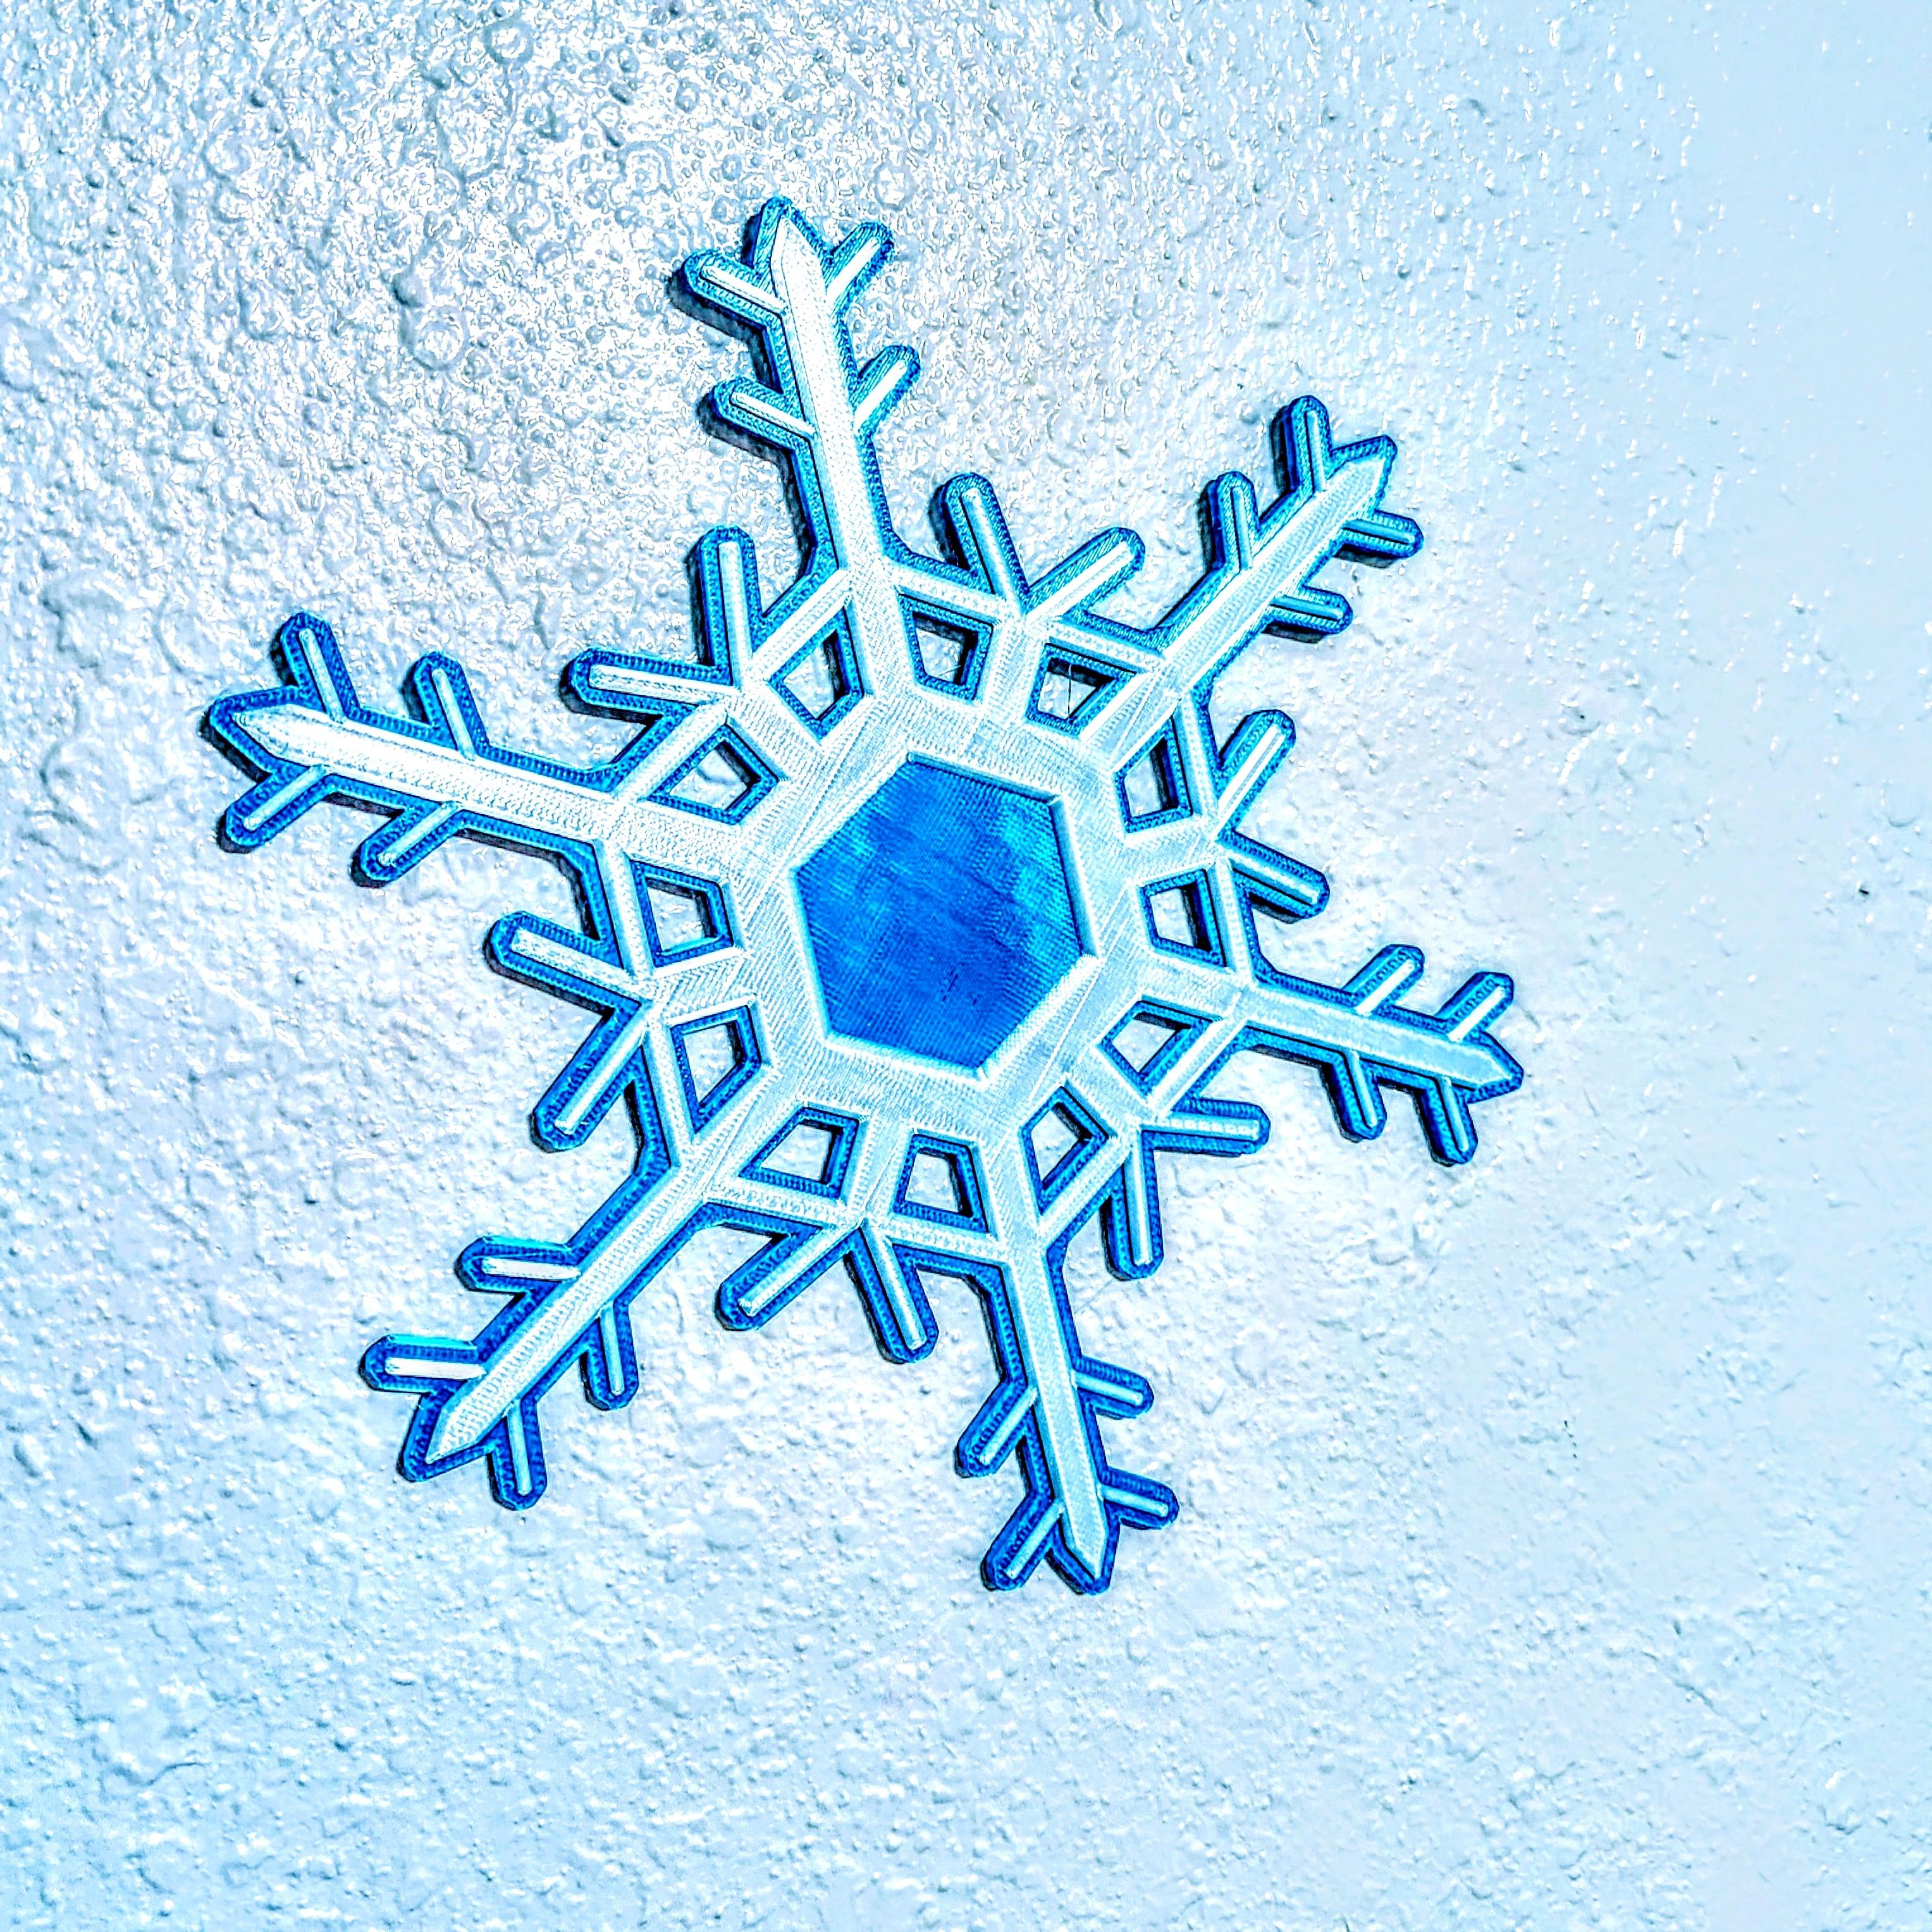 Snowflake Wall Decor